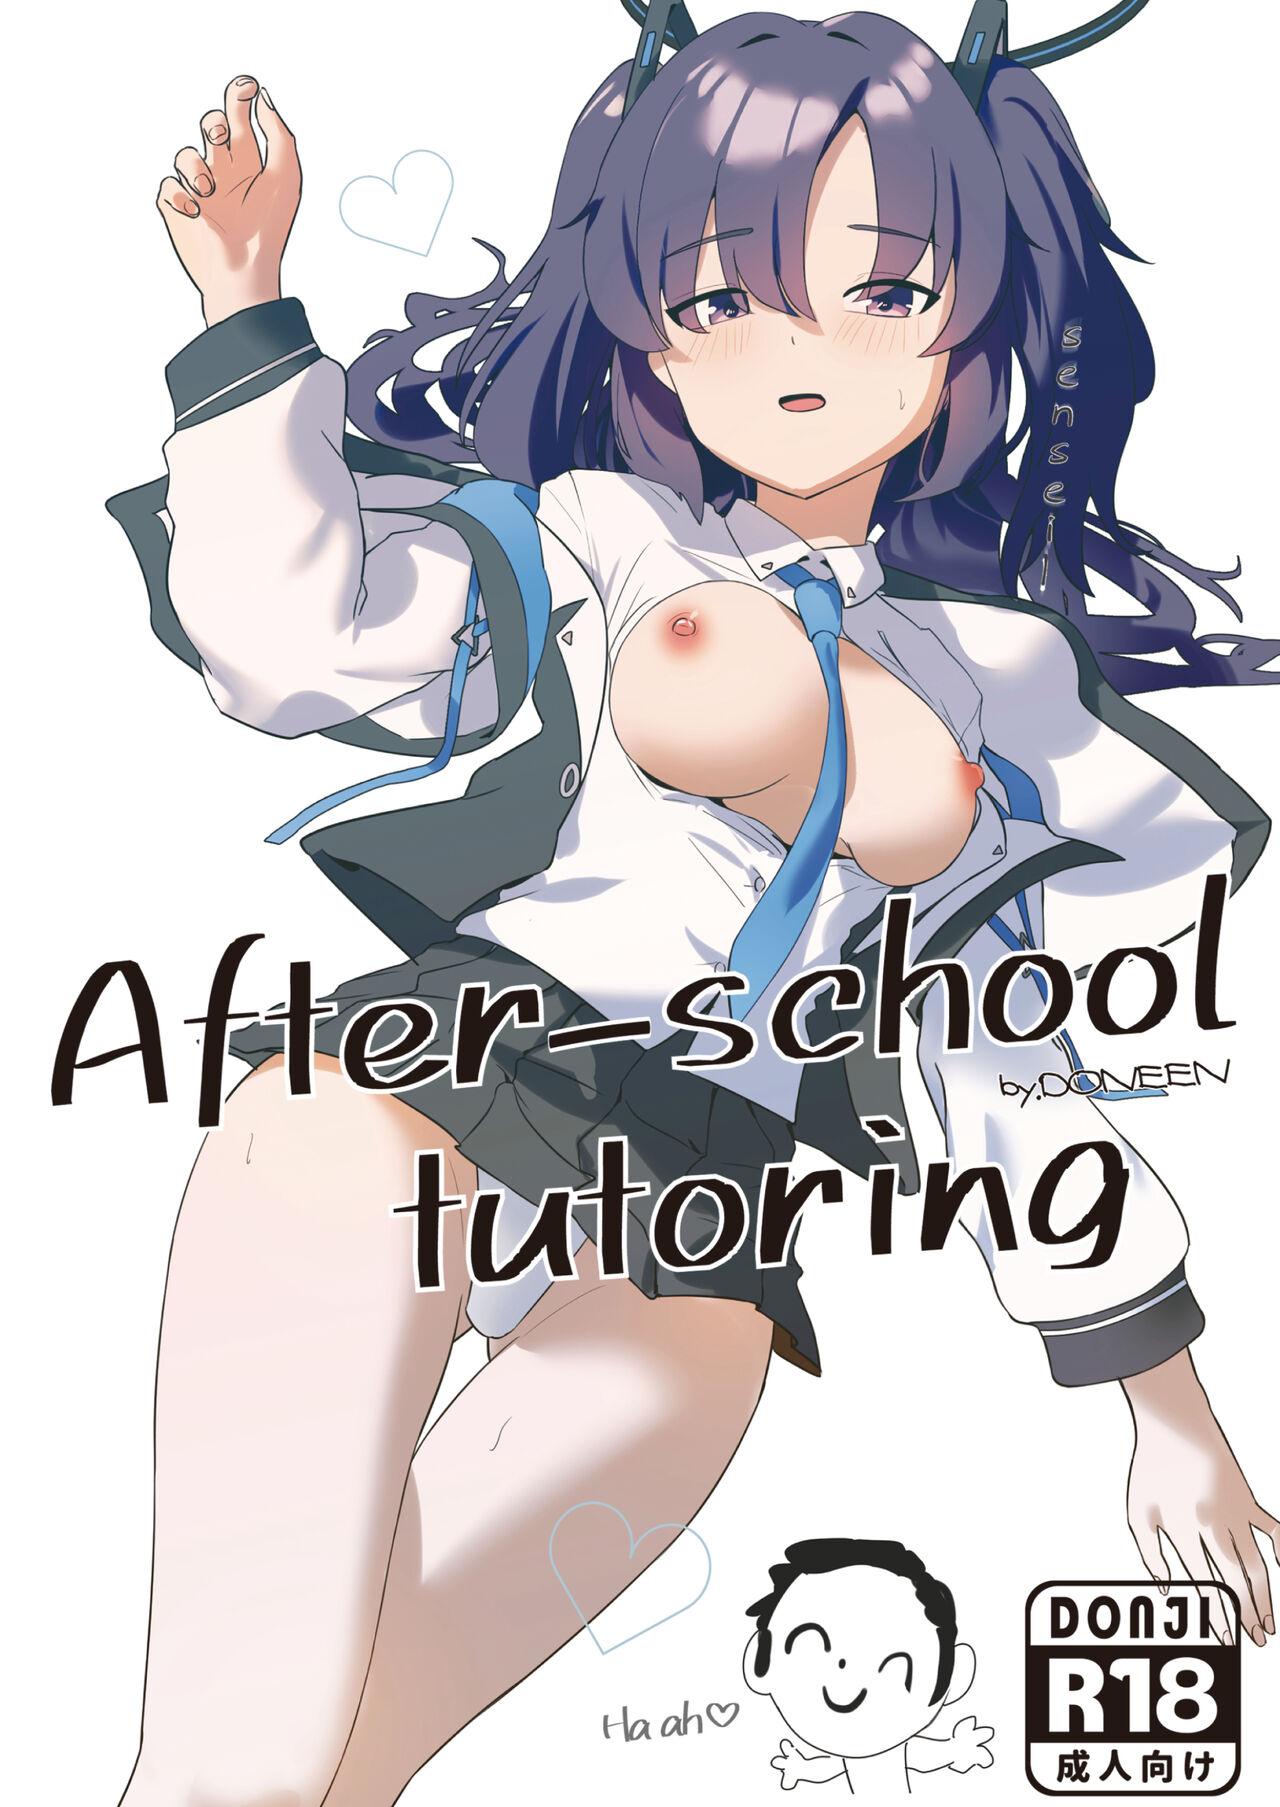 After-School tutoring 0